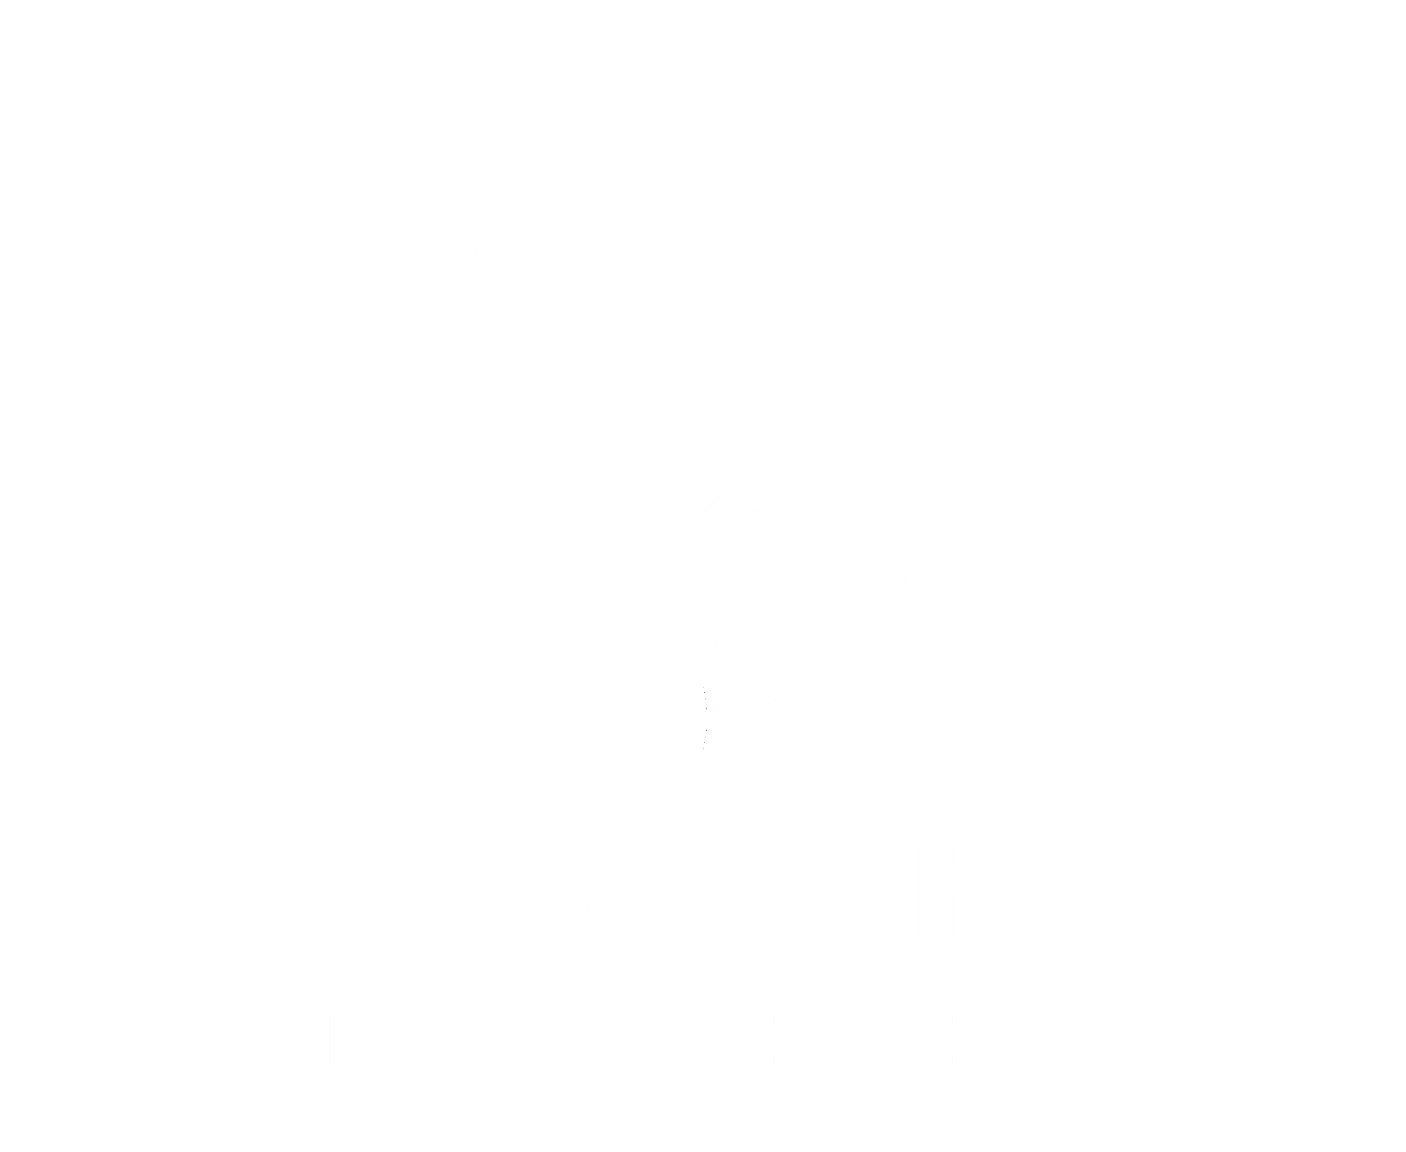 Indiken Insurance Agencies LTD